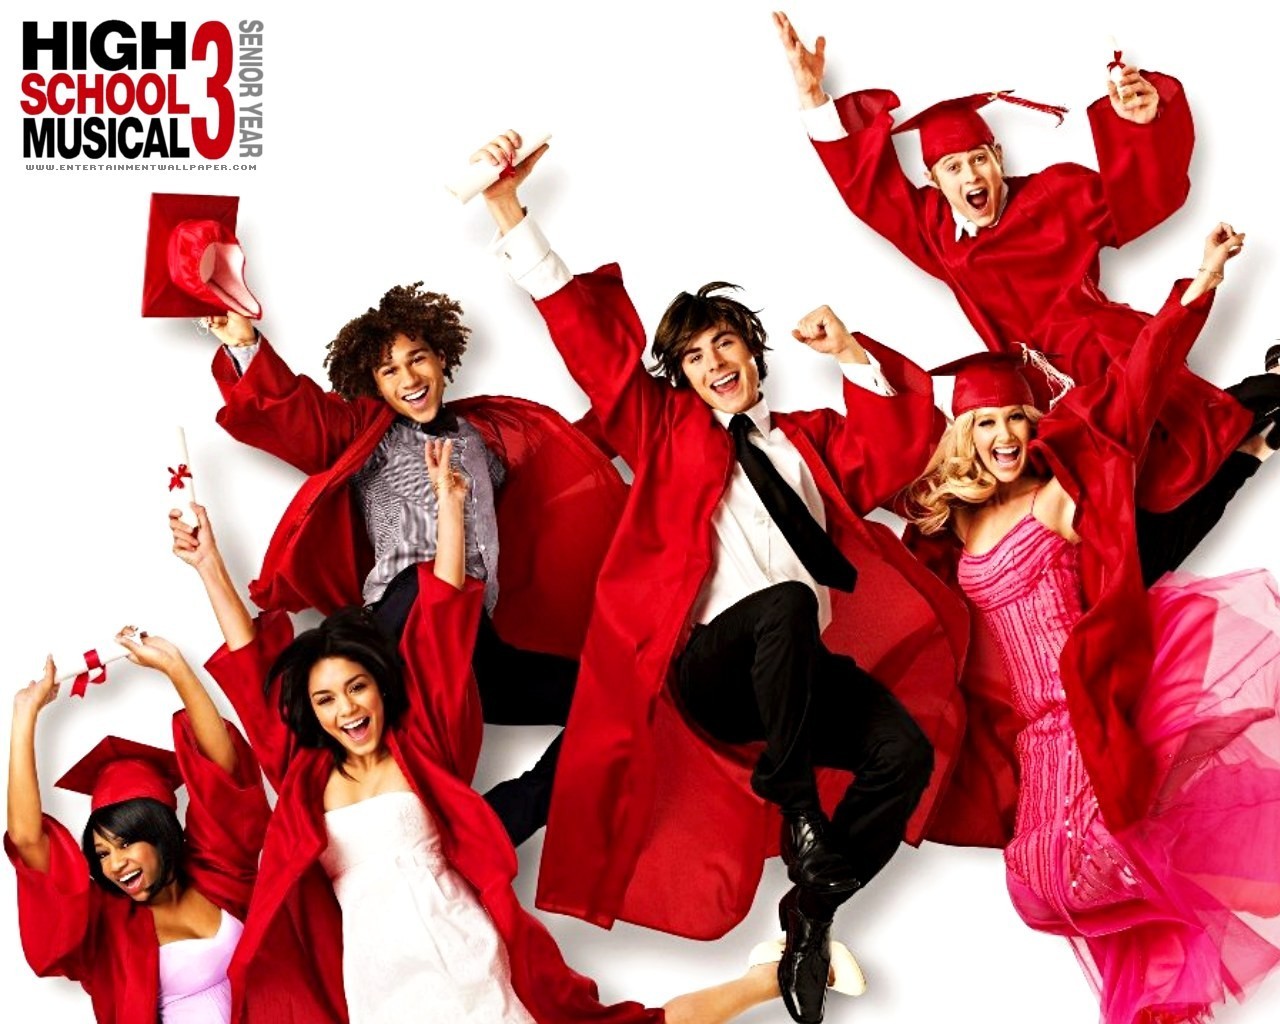 High Resolution Wallpaper | High School Musical 3: Senior Year 1280x1024 px